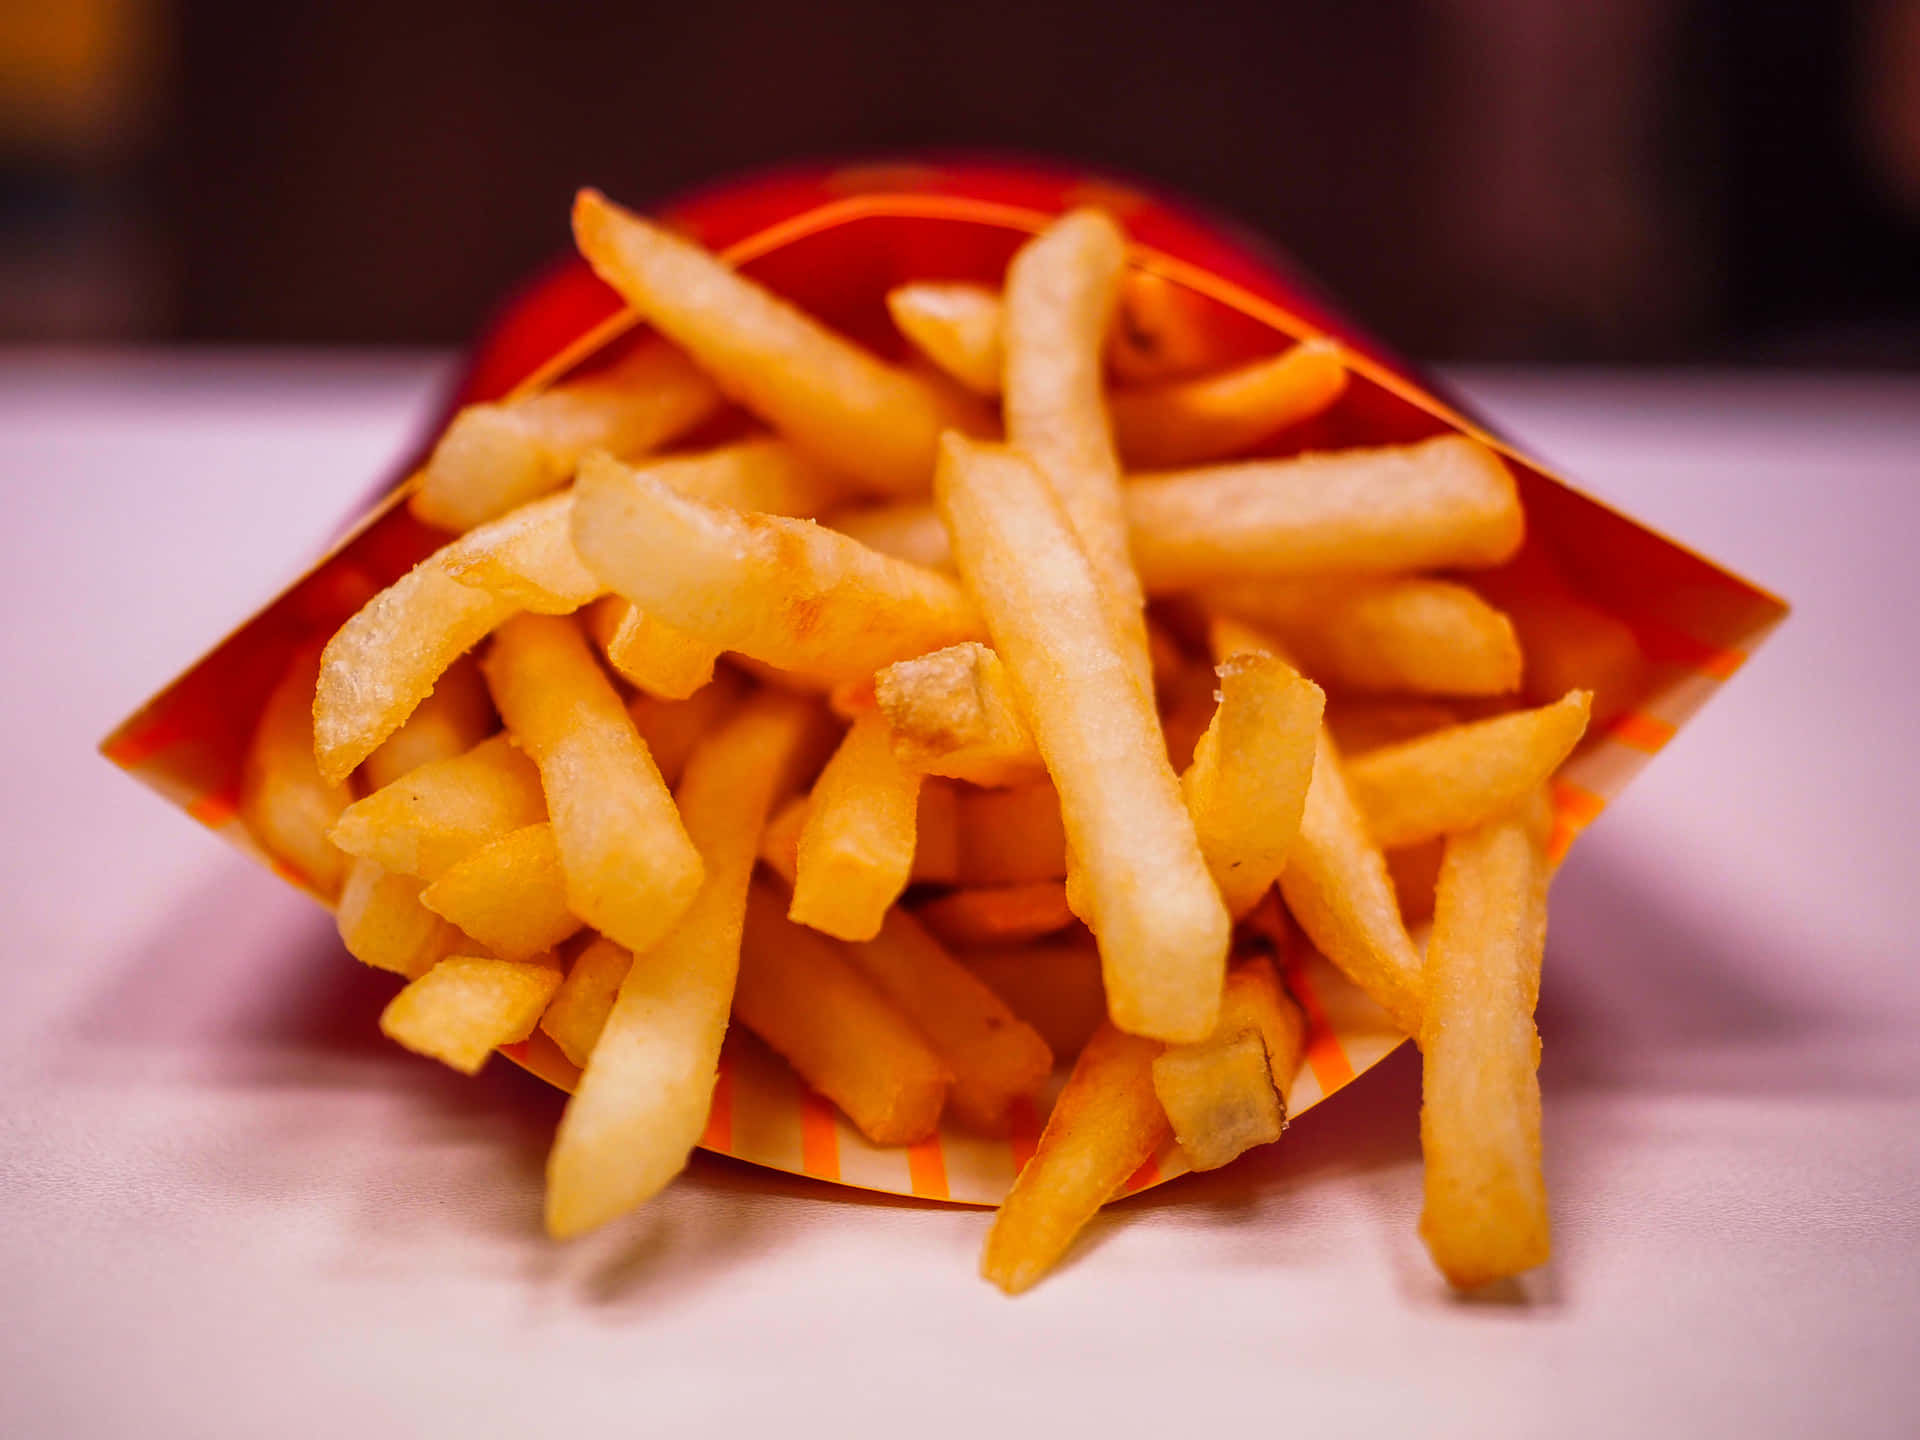 Captivating Close-Up Image of Golden Crispy French Fries